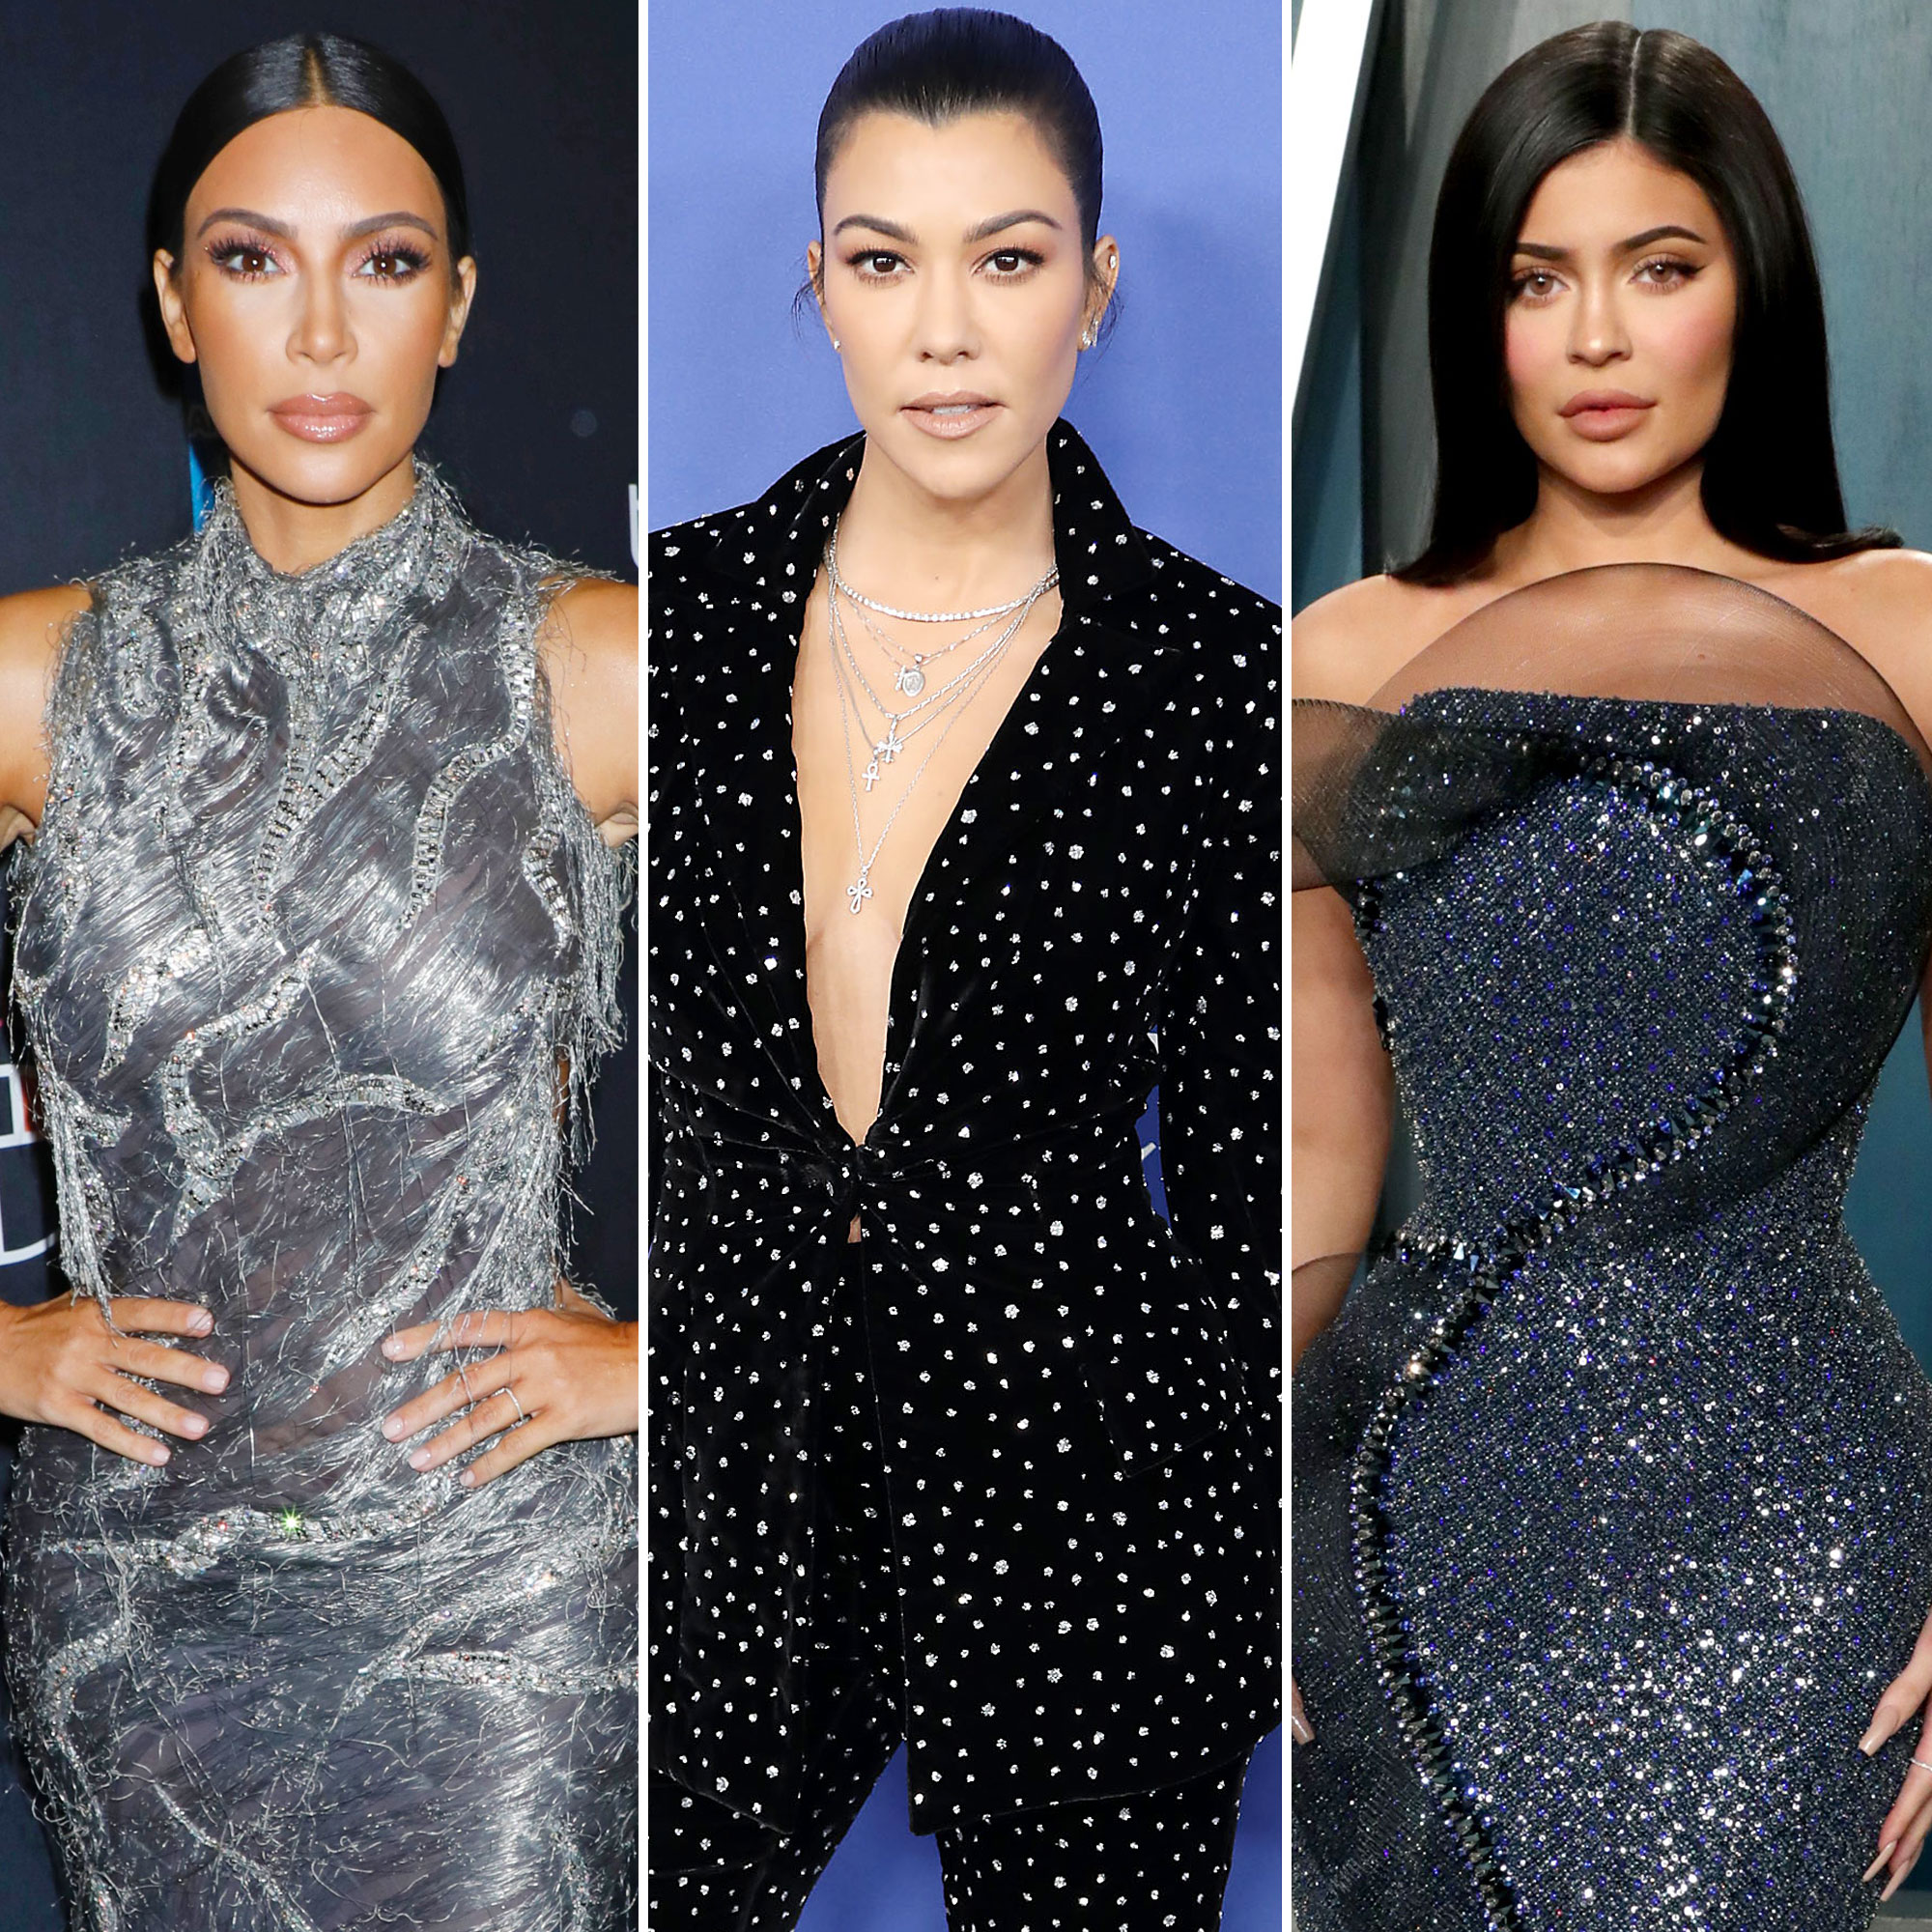 LOUIS VUITTON Handbag Collection- Kylie and Kendal Jenner, Kourtney and Kim  Kardashian 